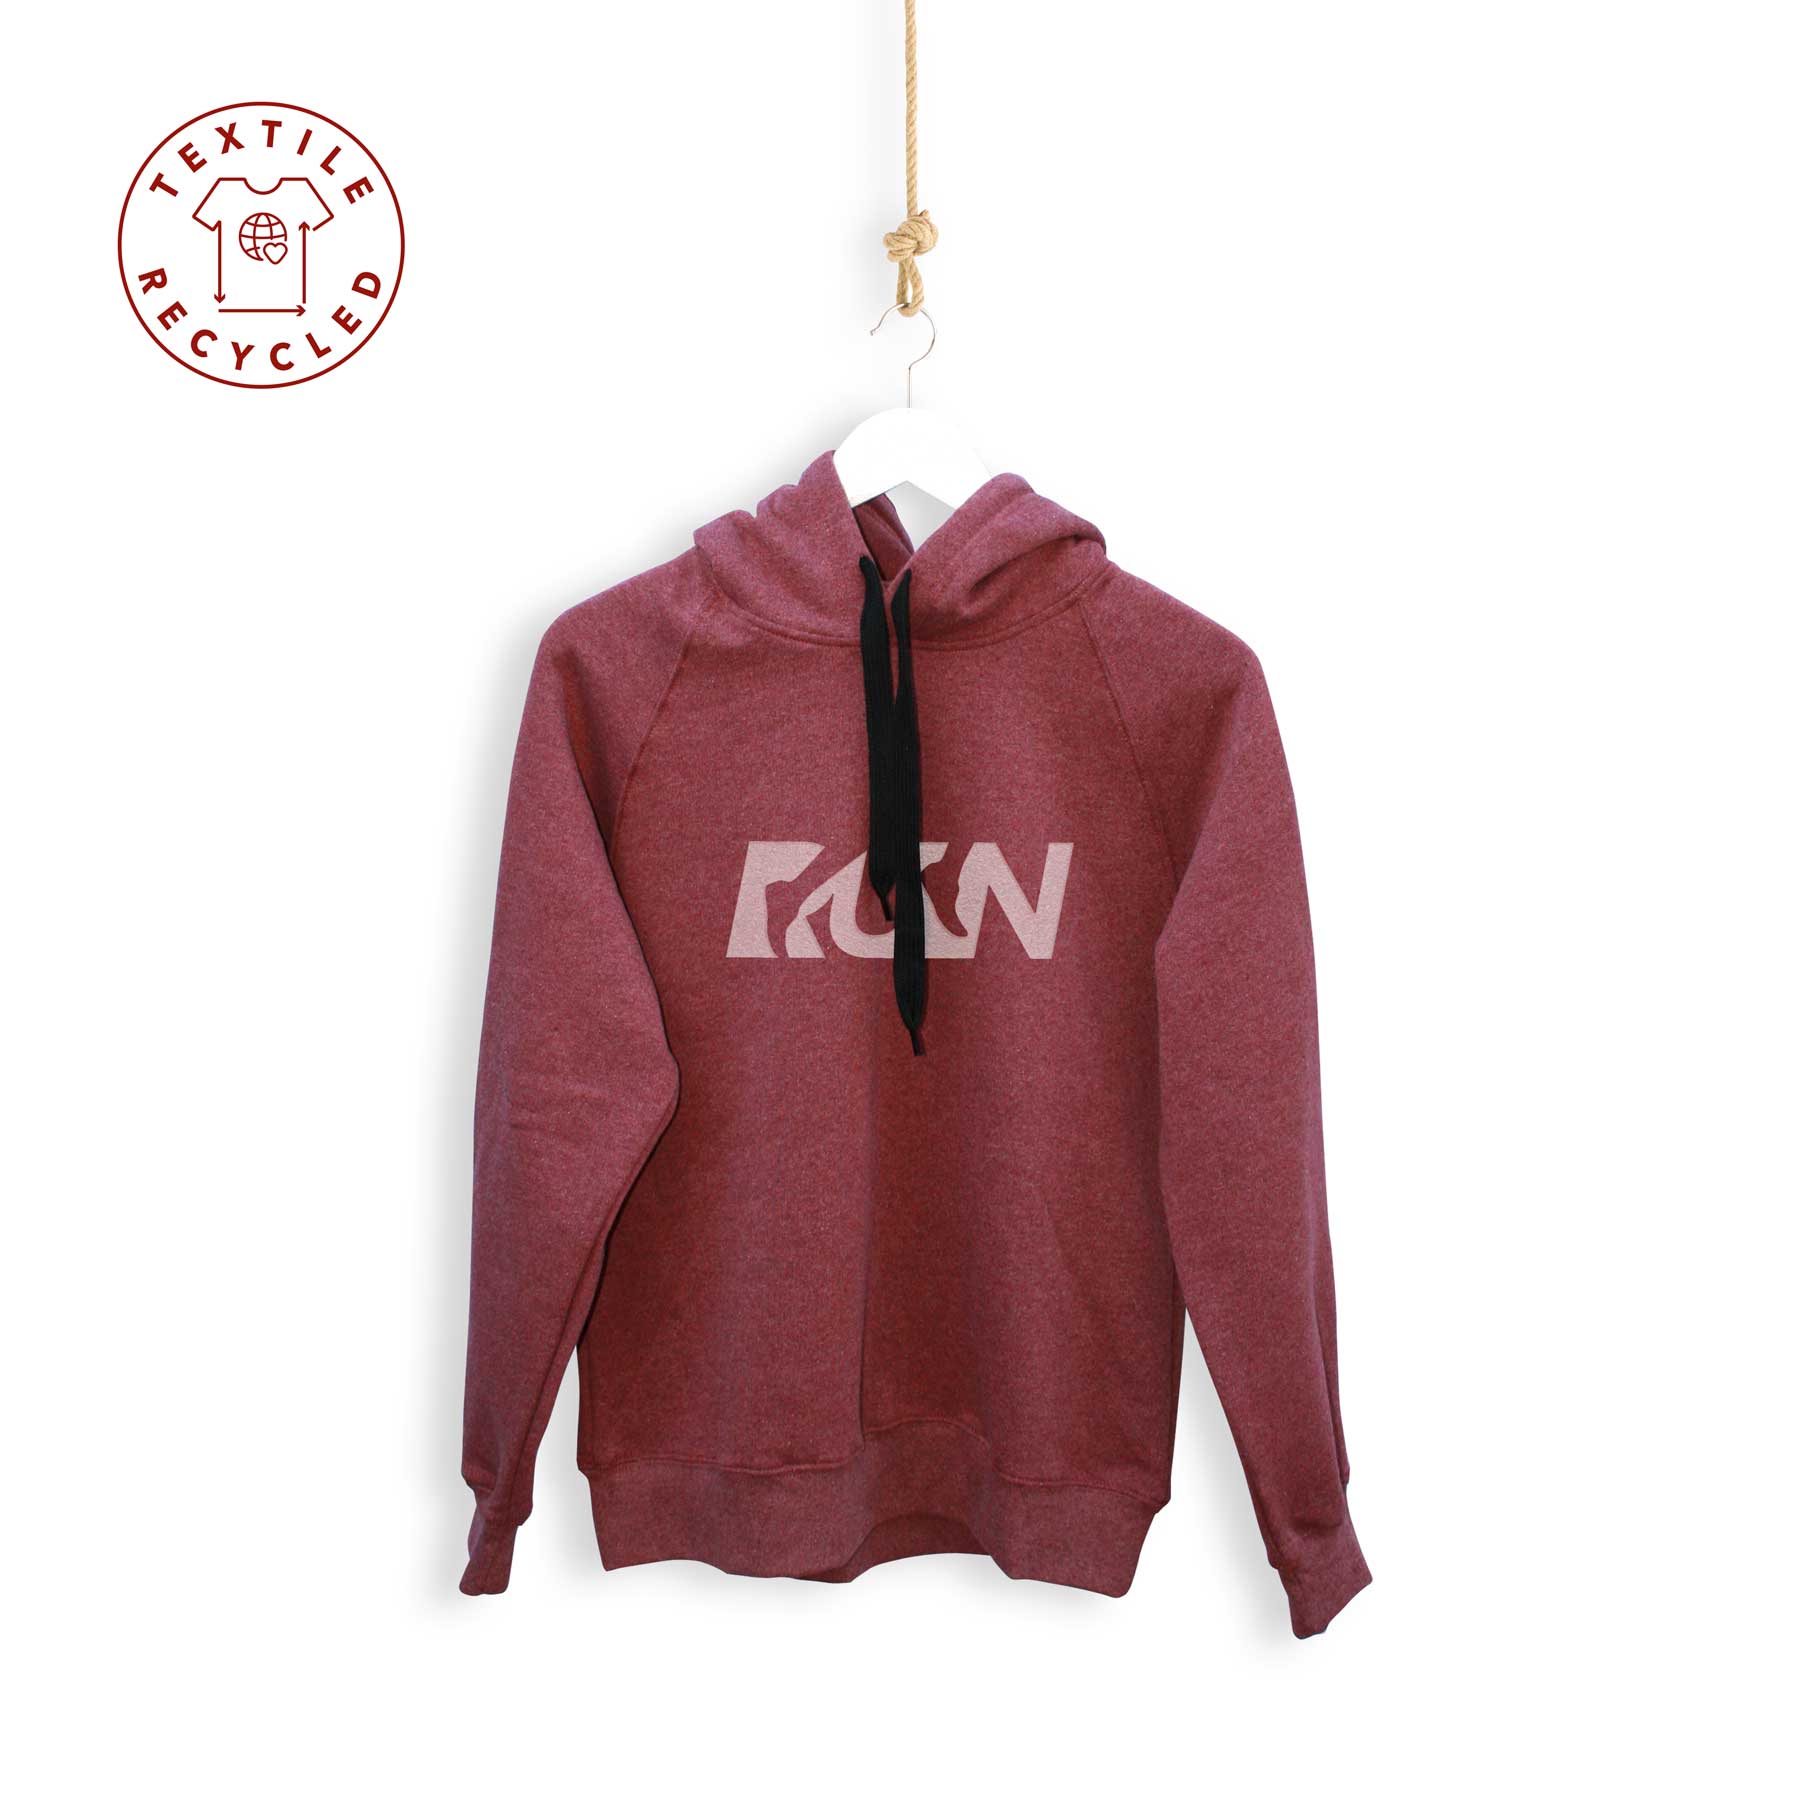 Leon | venta tienda online ropa